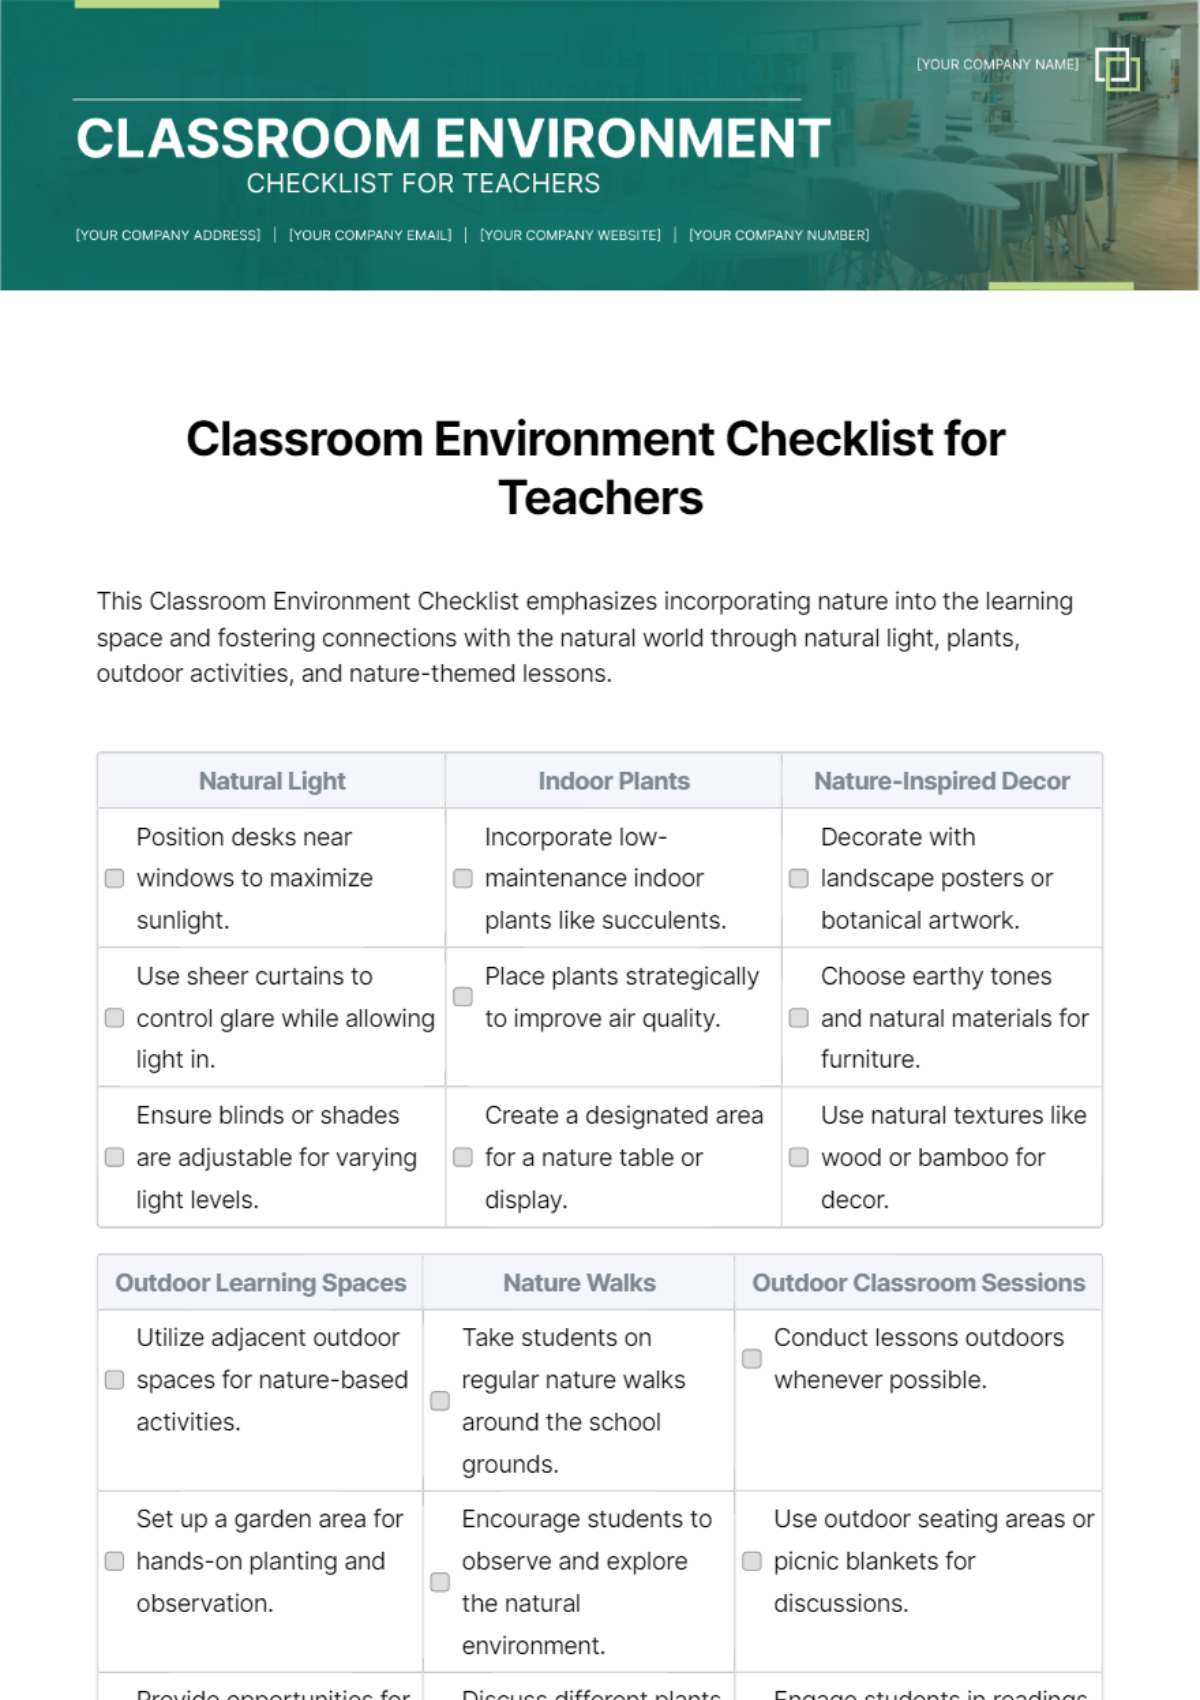 Classroom Environment Checklist for Teachers Template